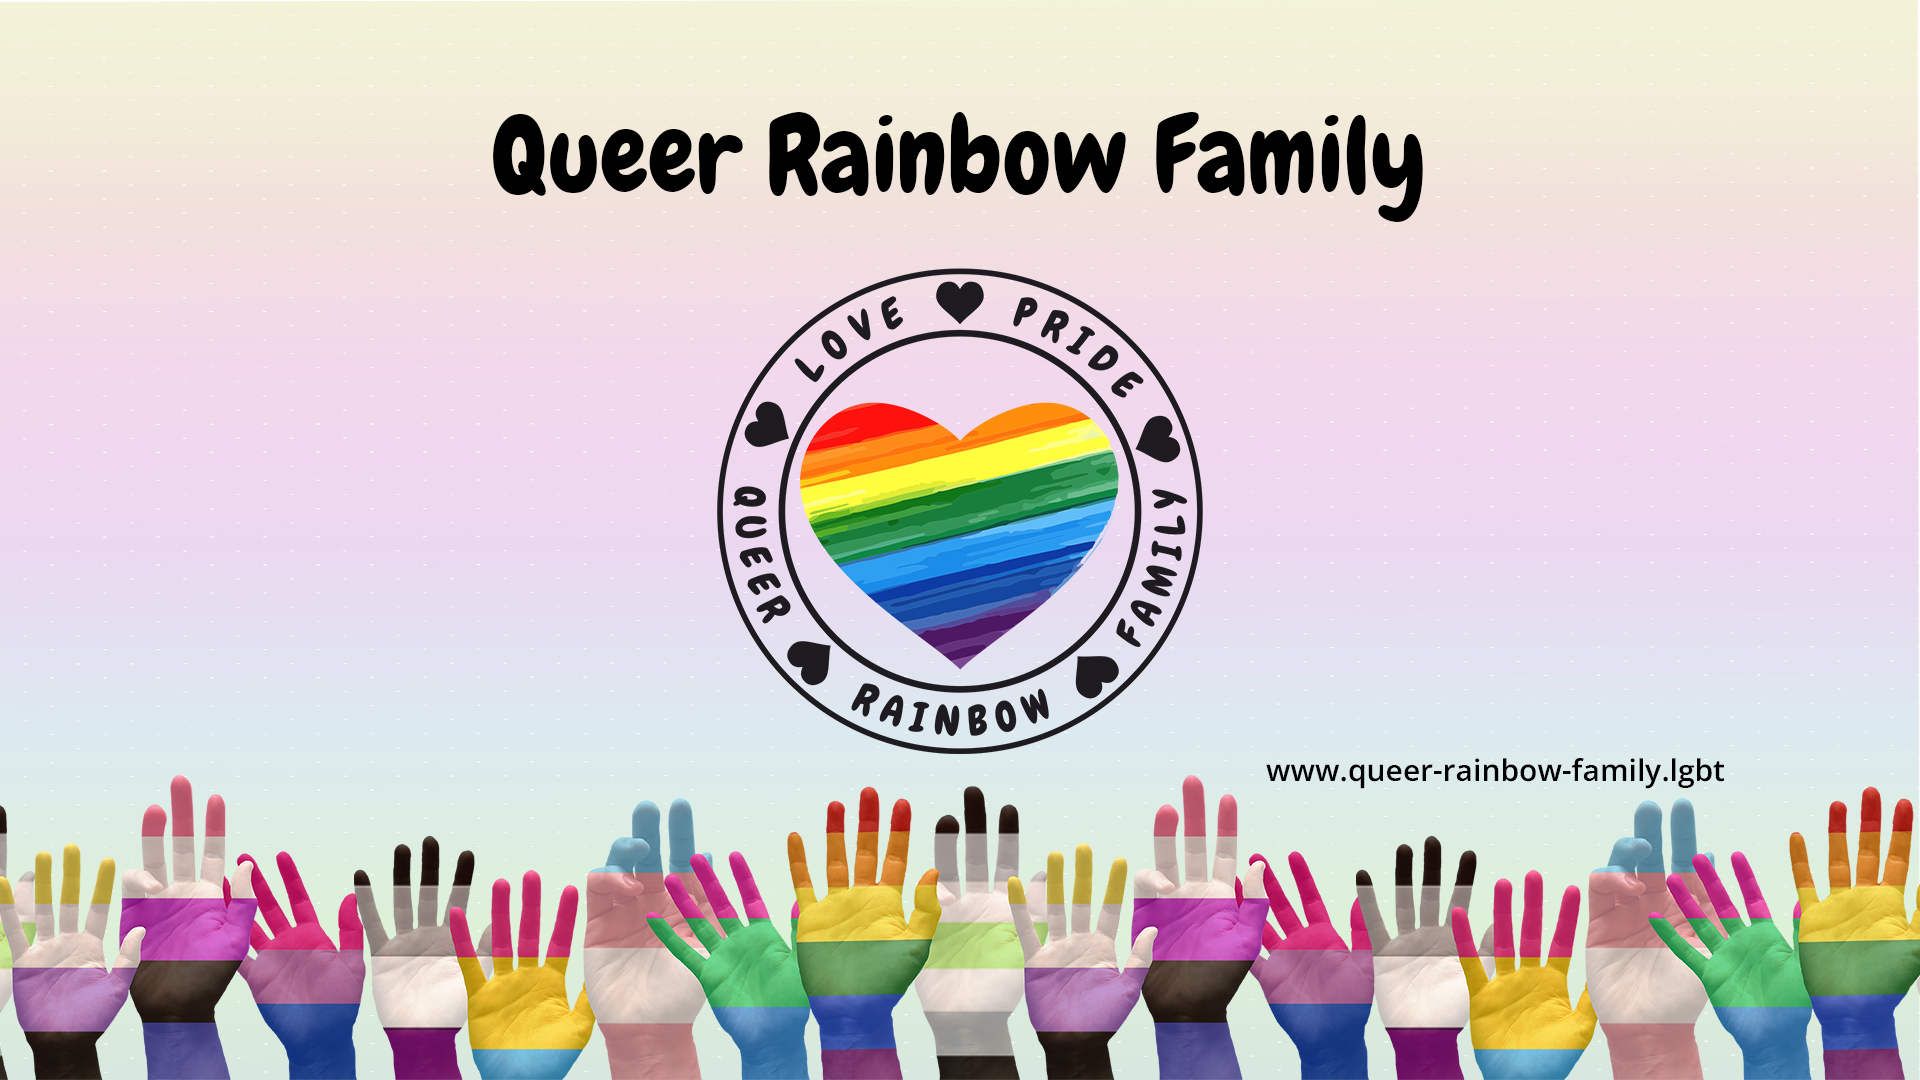 (c) Queer-rainbow-family.lgbt